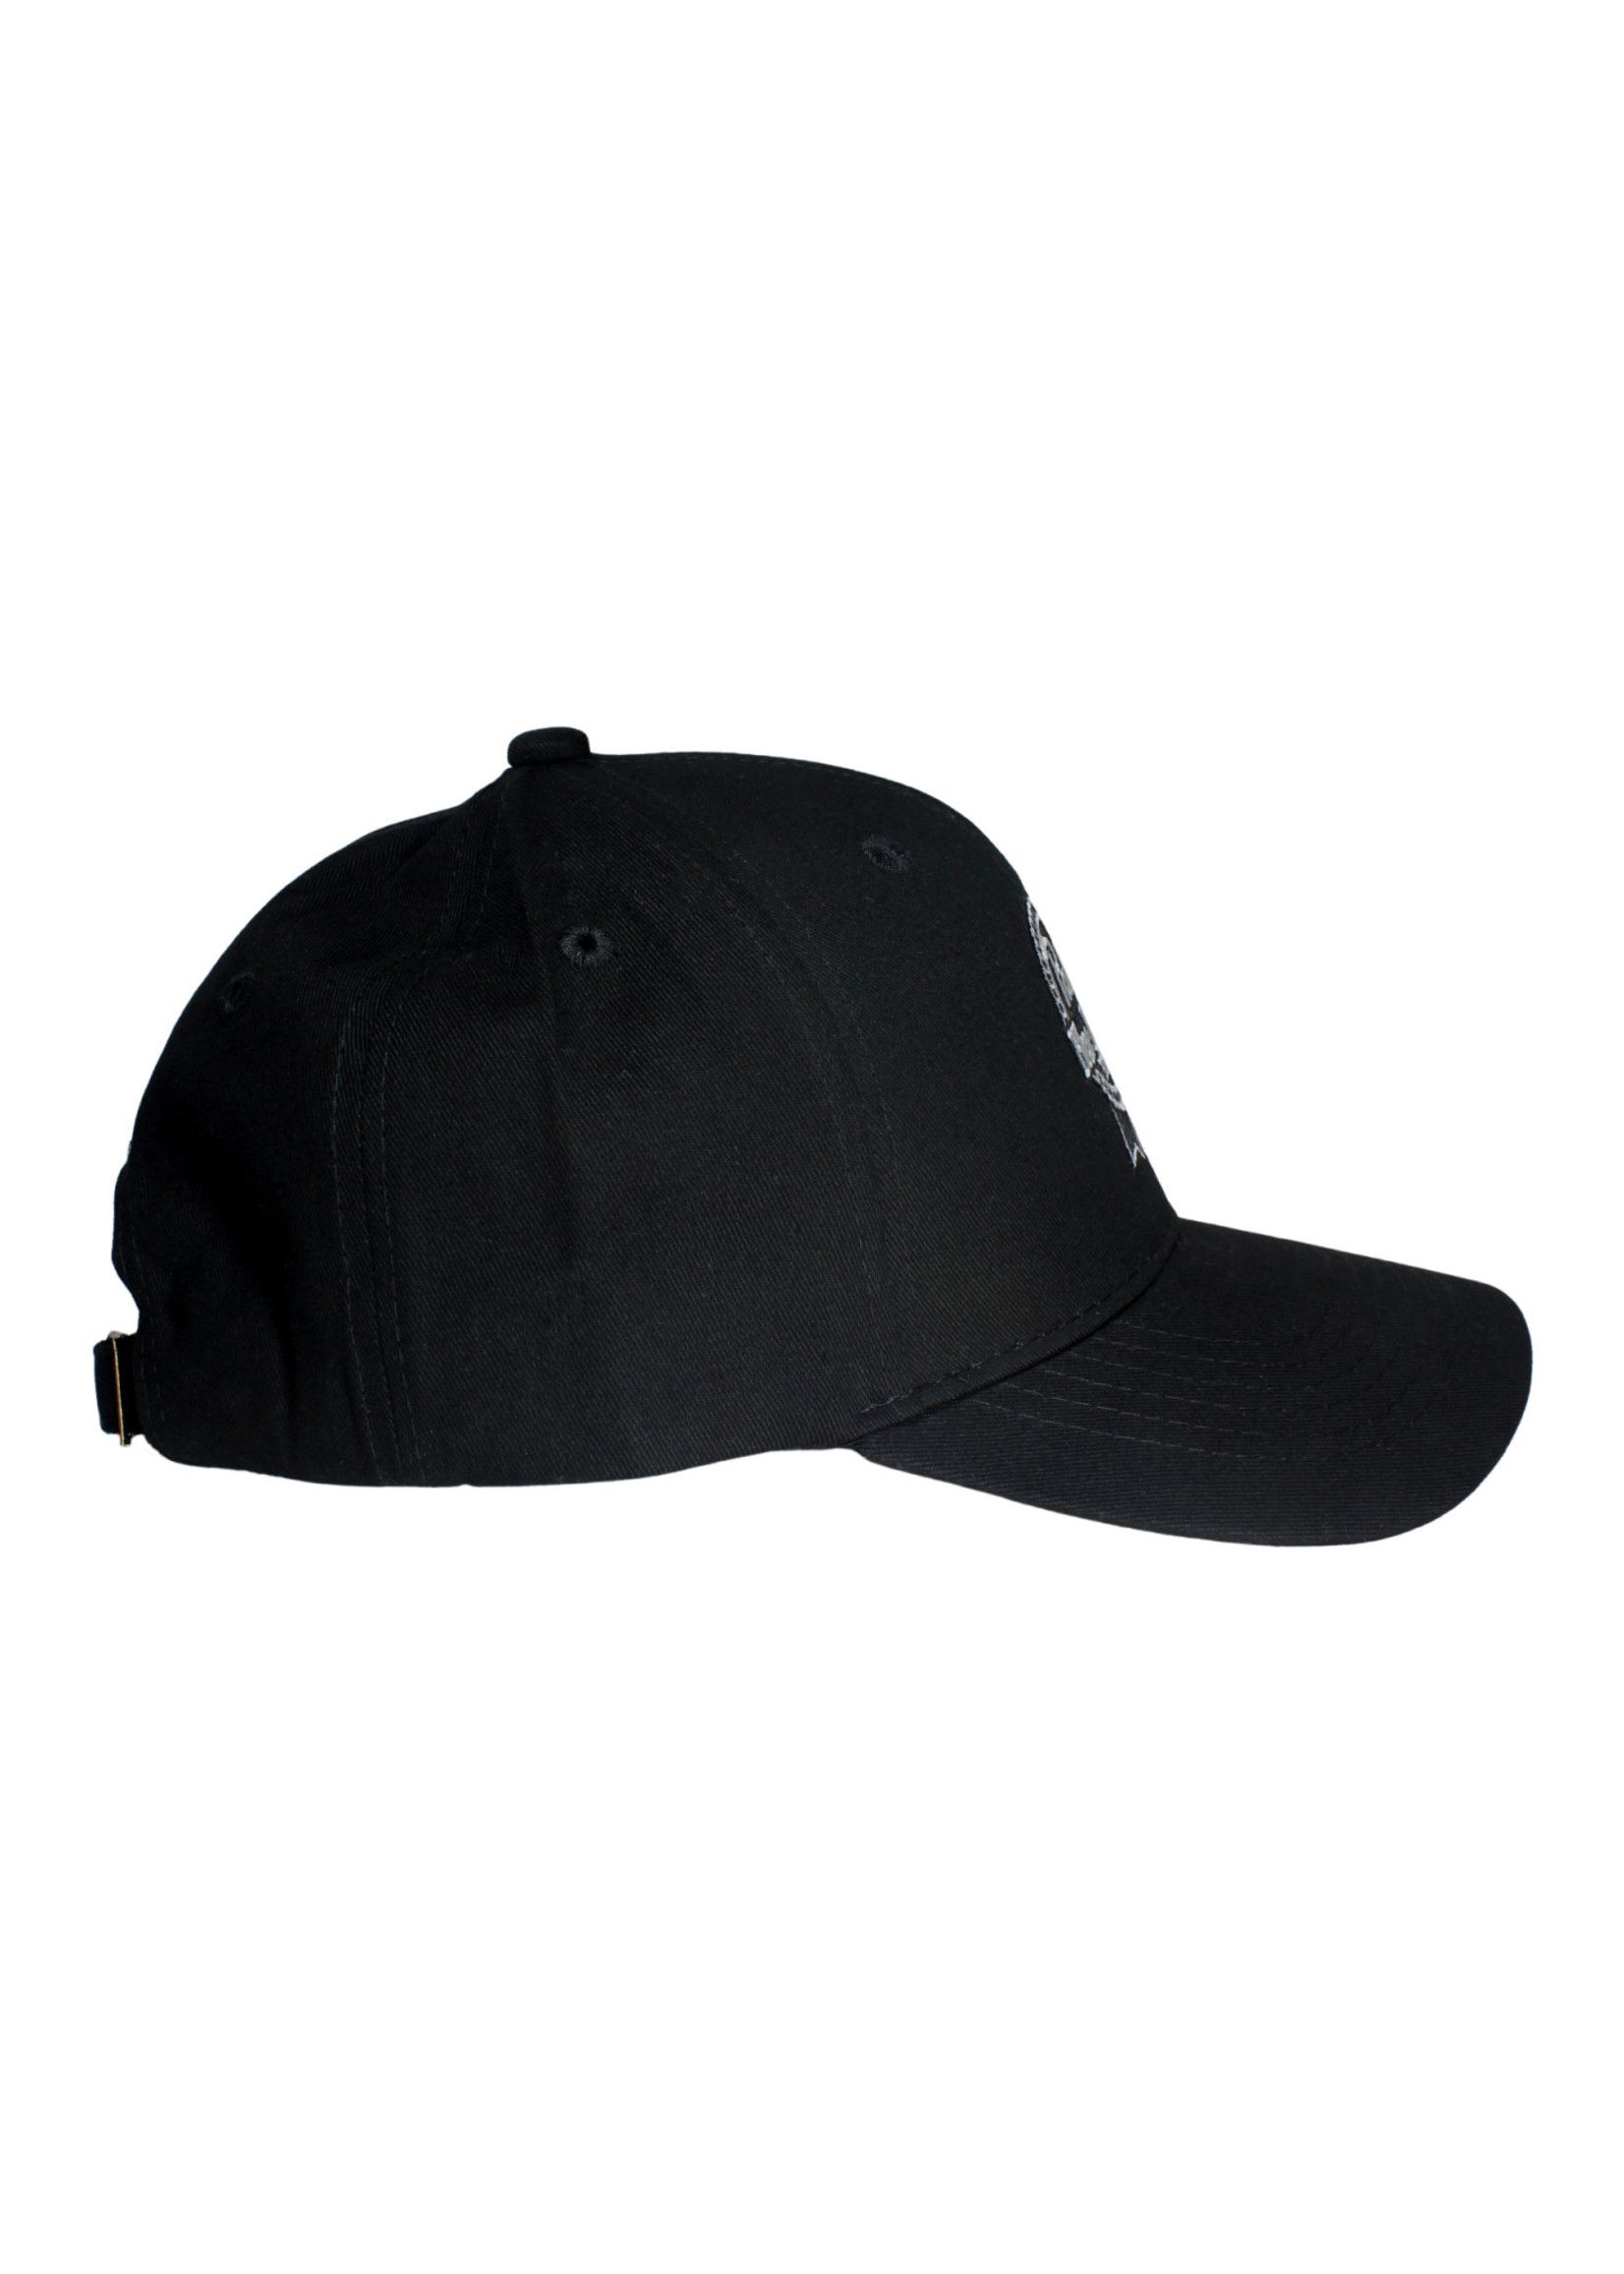 Pabst Pabst Ribbon Black Cap